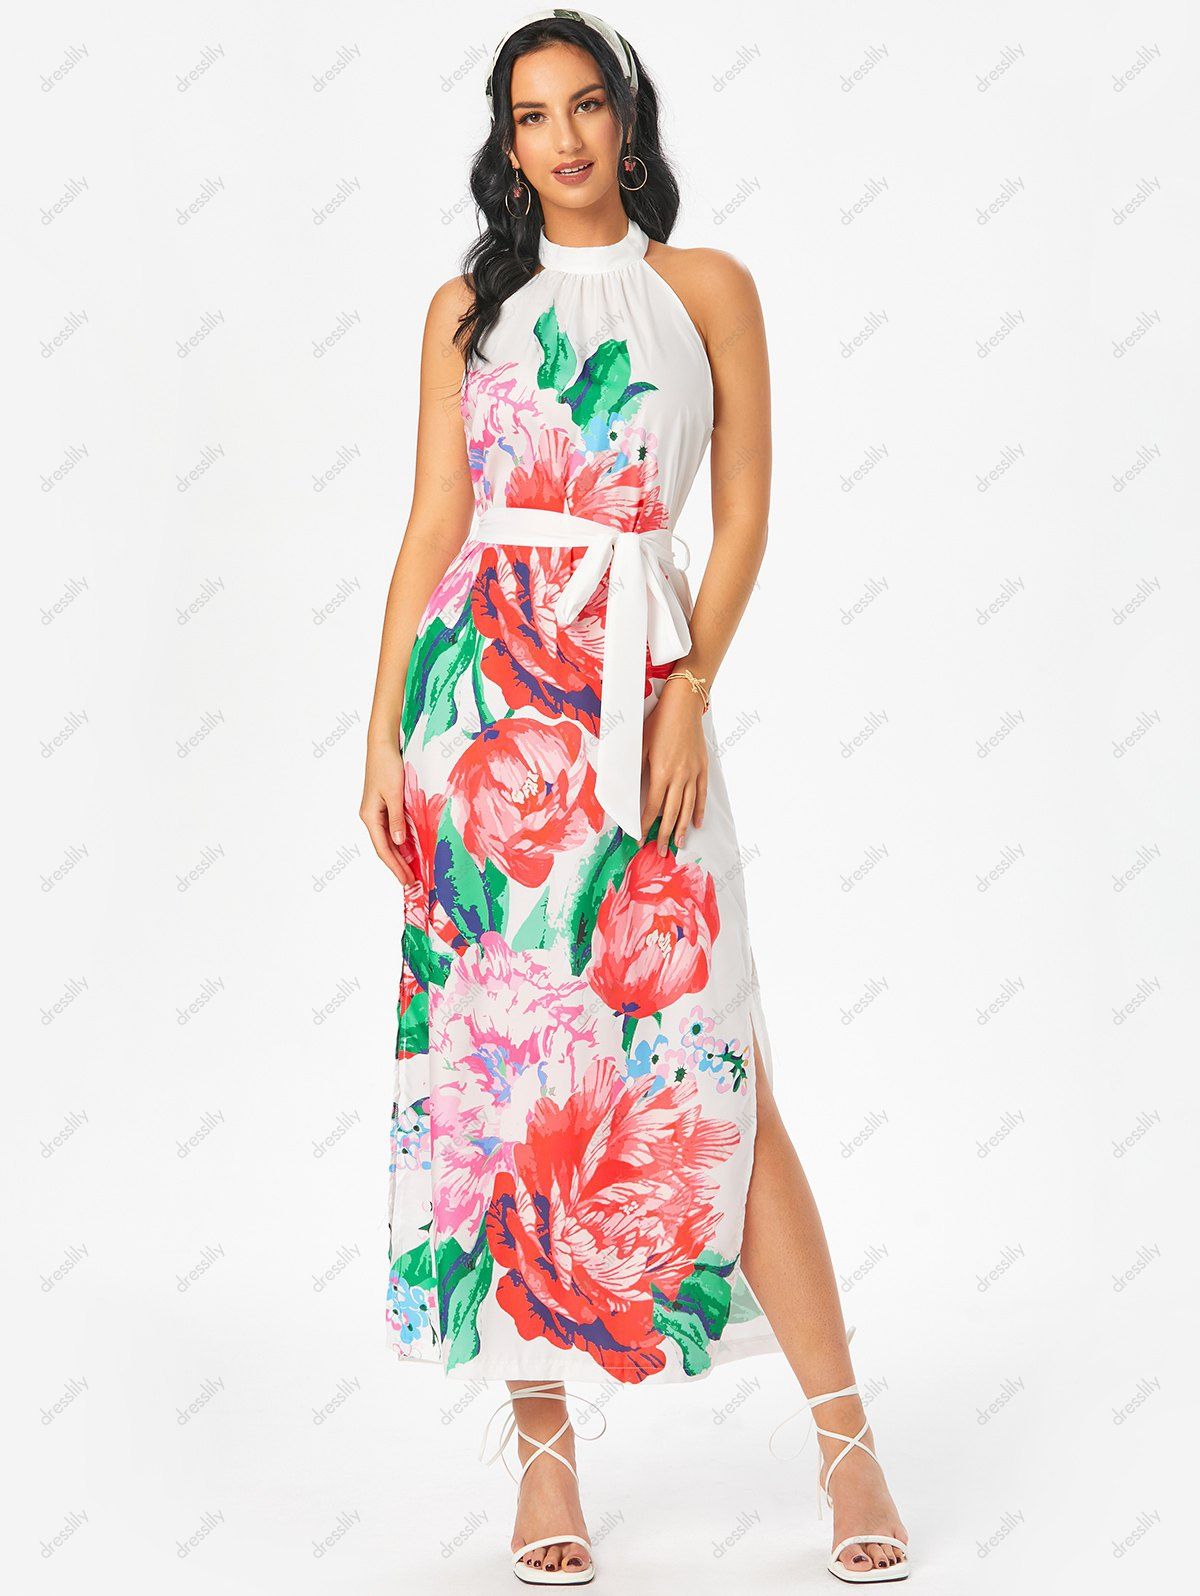 Flower Print Vacation Dress High Neck Belted Maxi Dress Side Slit Long Dress 